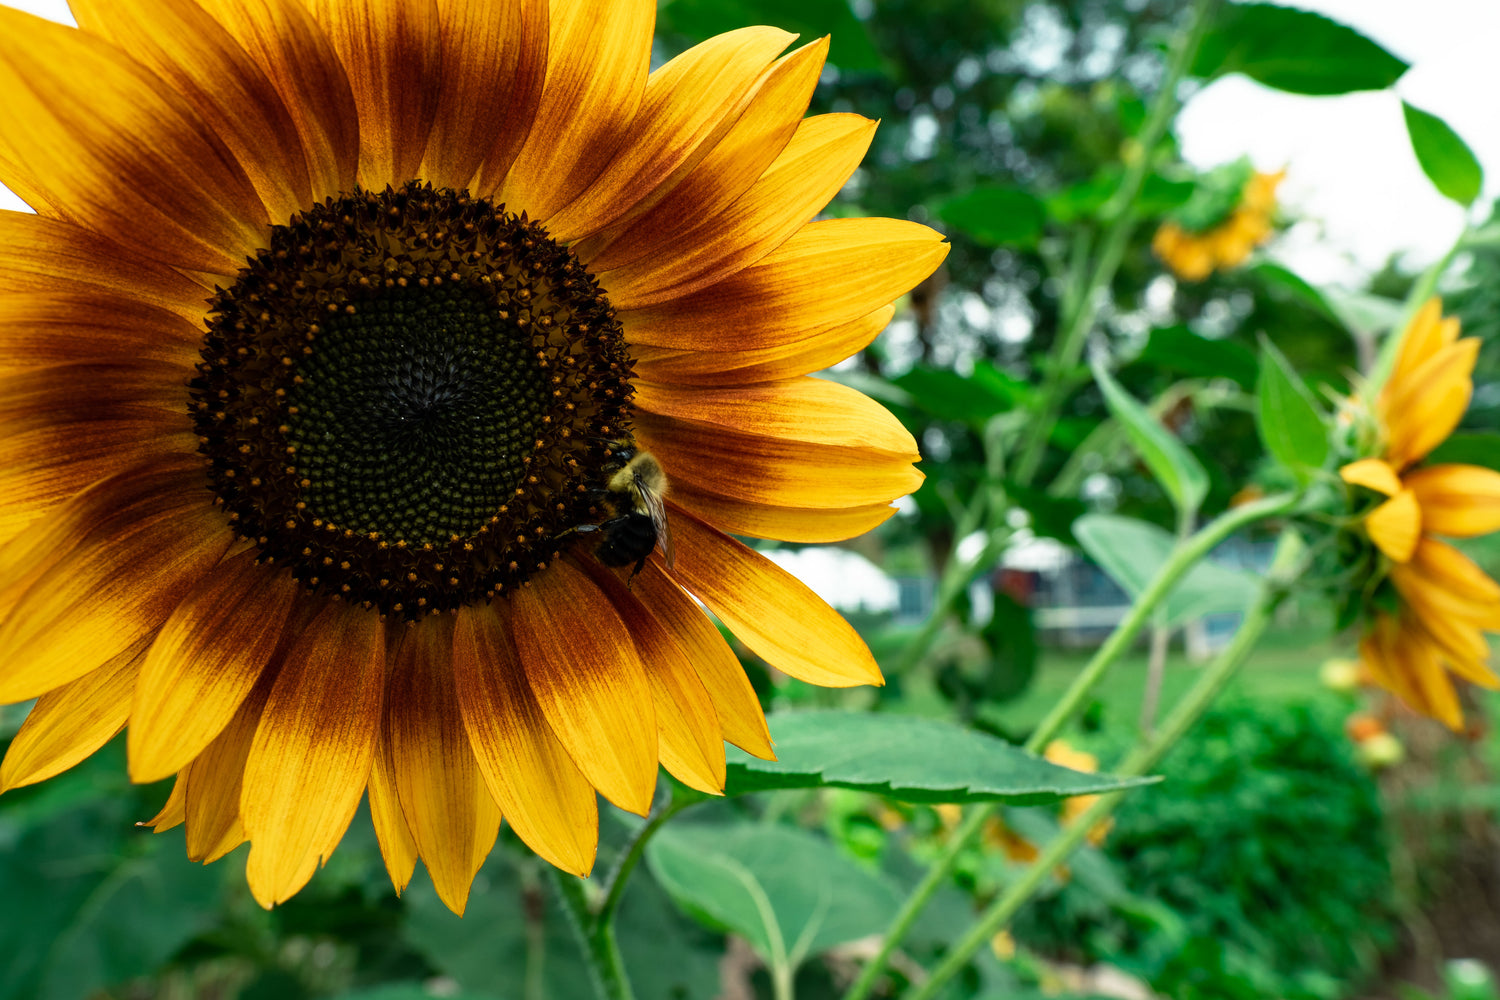 cbd wellness uses naturel sunflower oil in tinctures